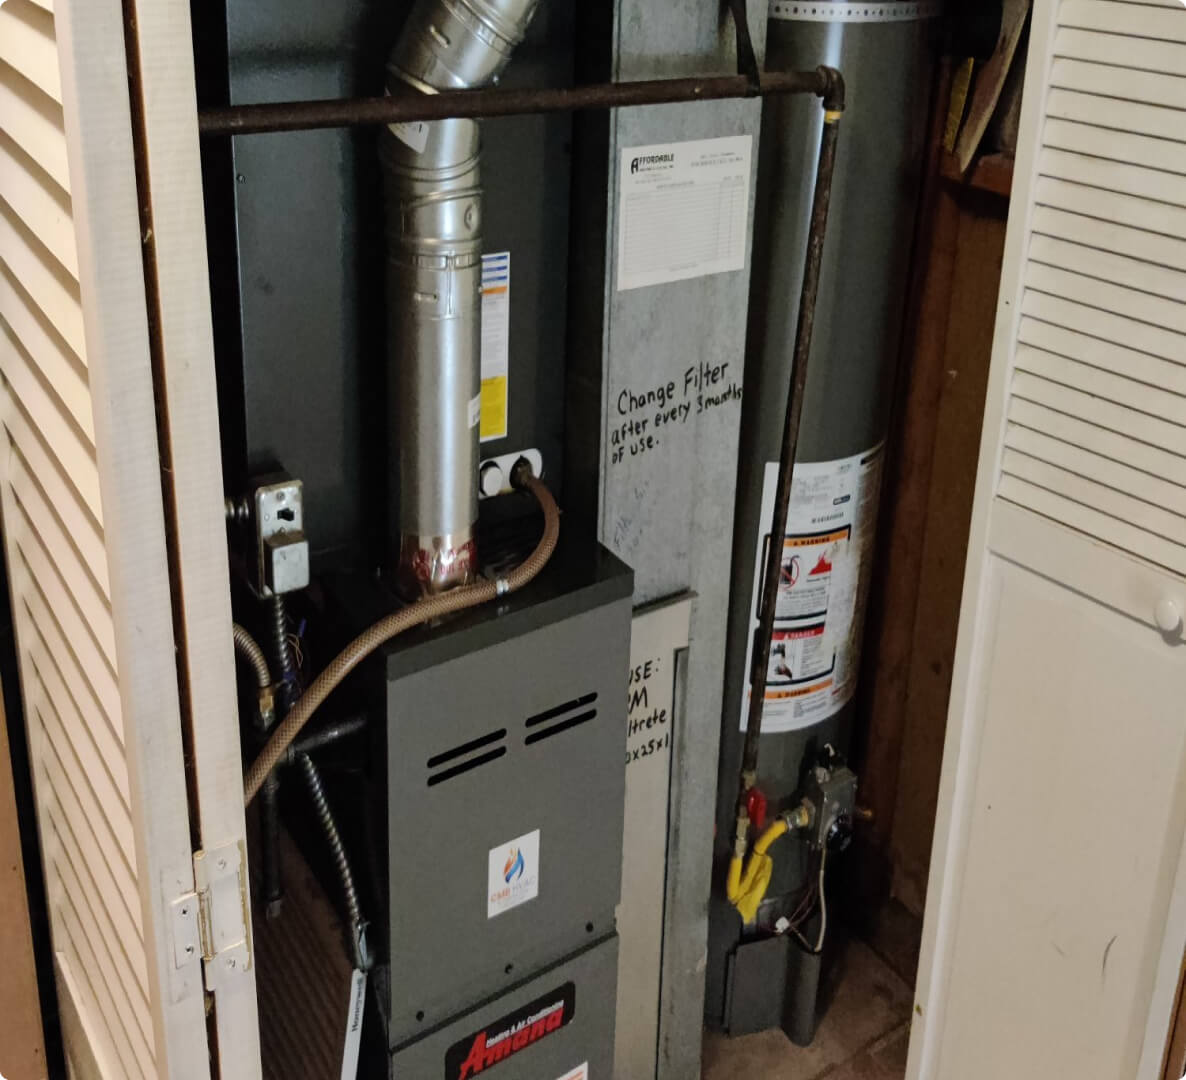 Residential HVAC furnace in a utility closet.